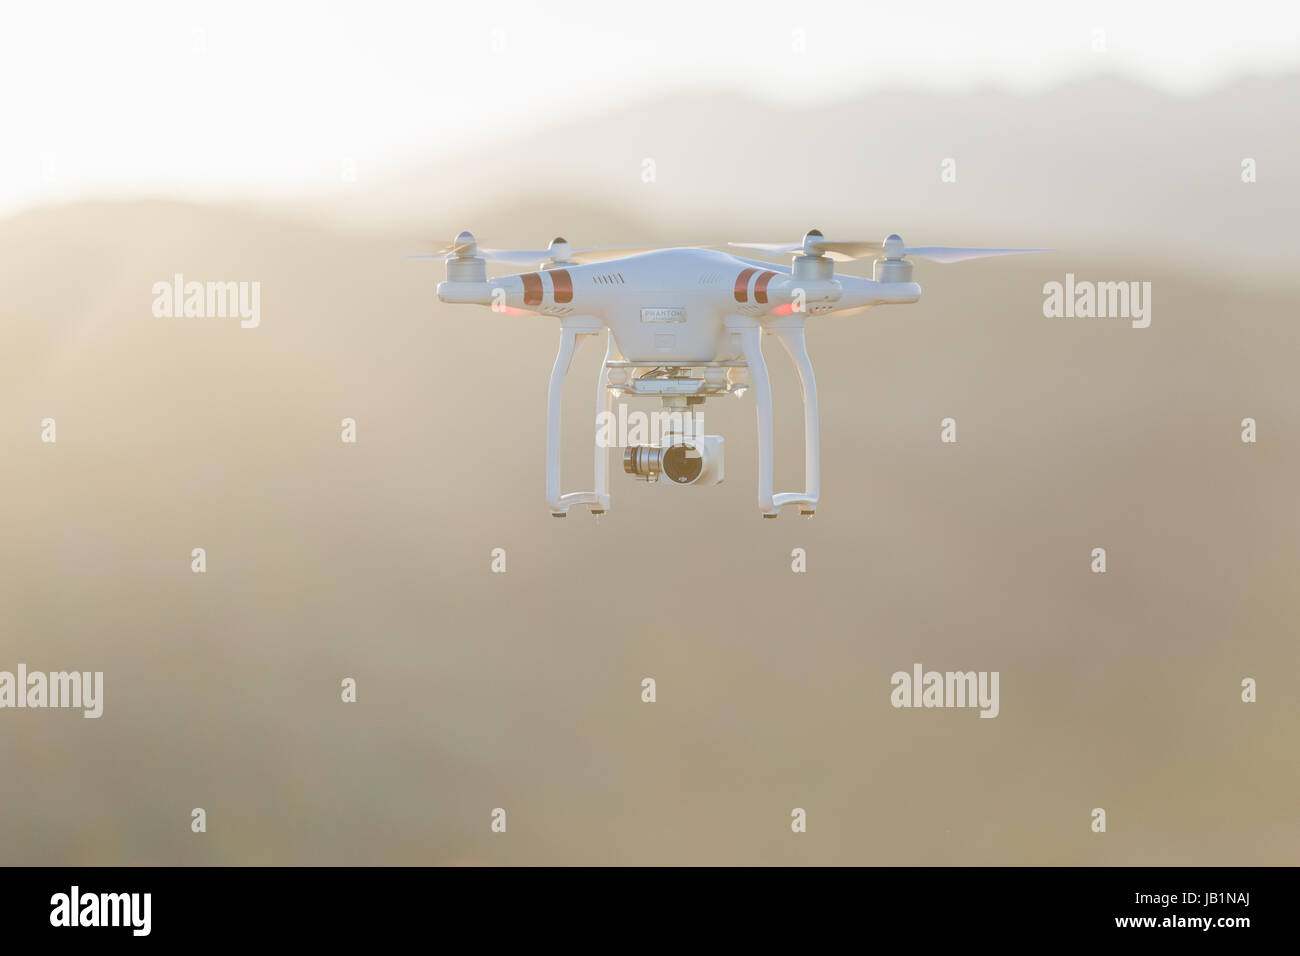 Stock Foto - Phantom-Drohne mit Kamera angeschlossen Stockfoto